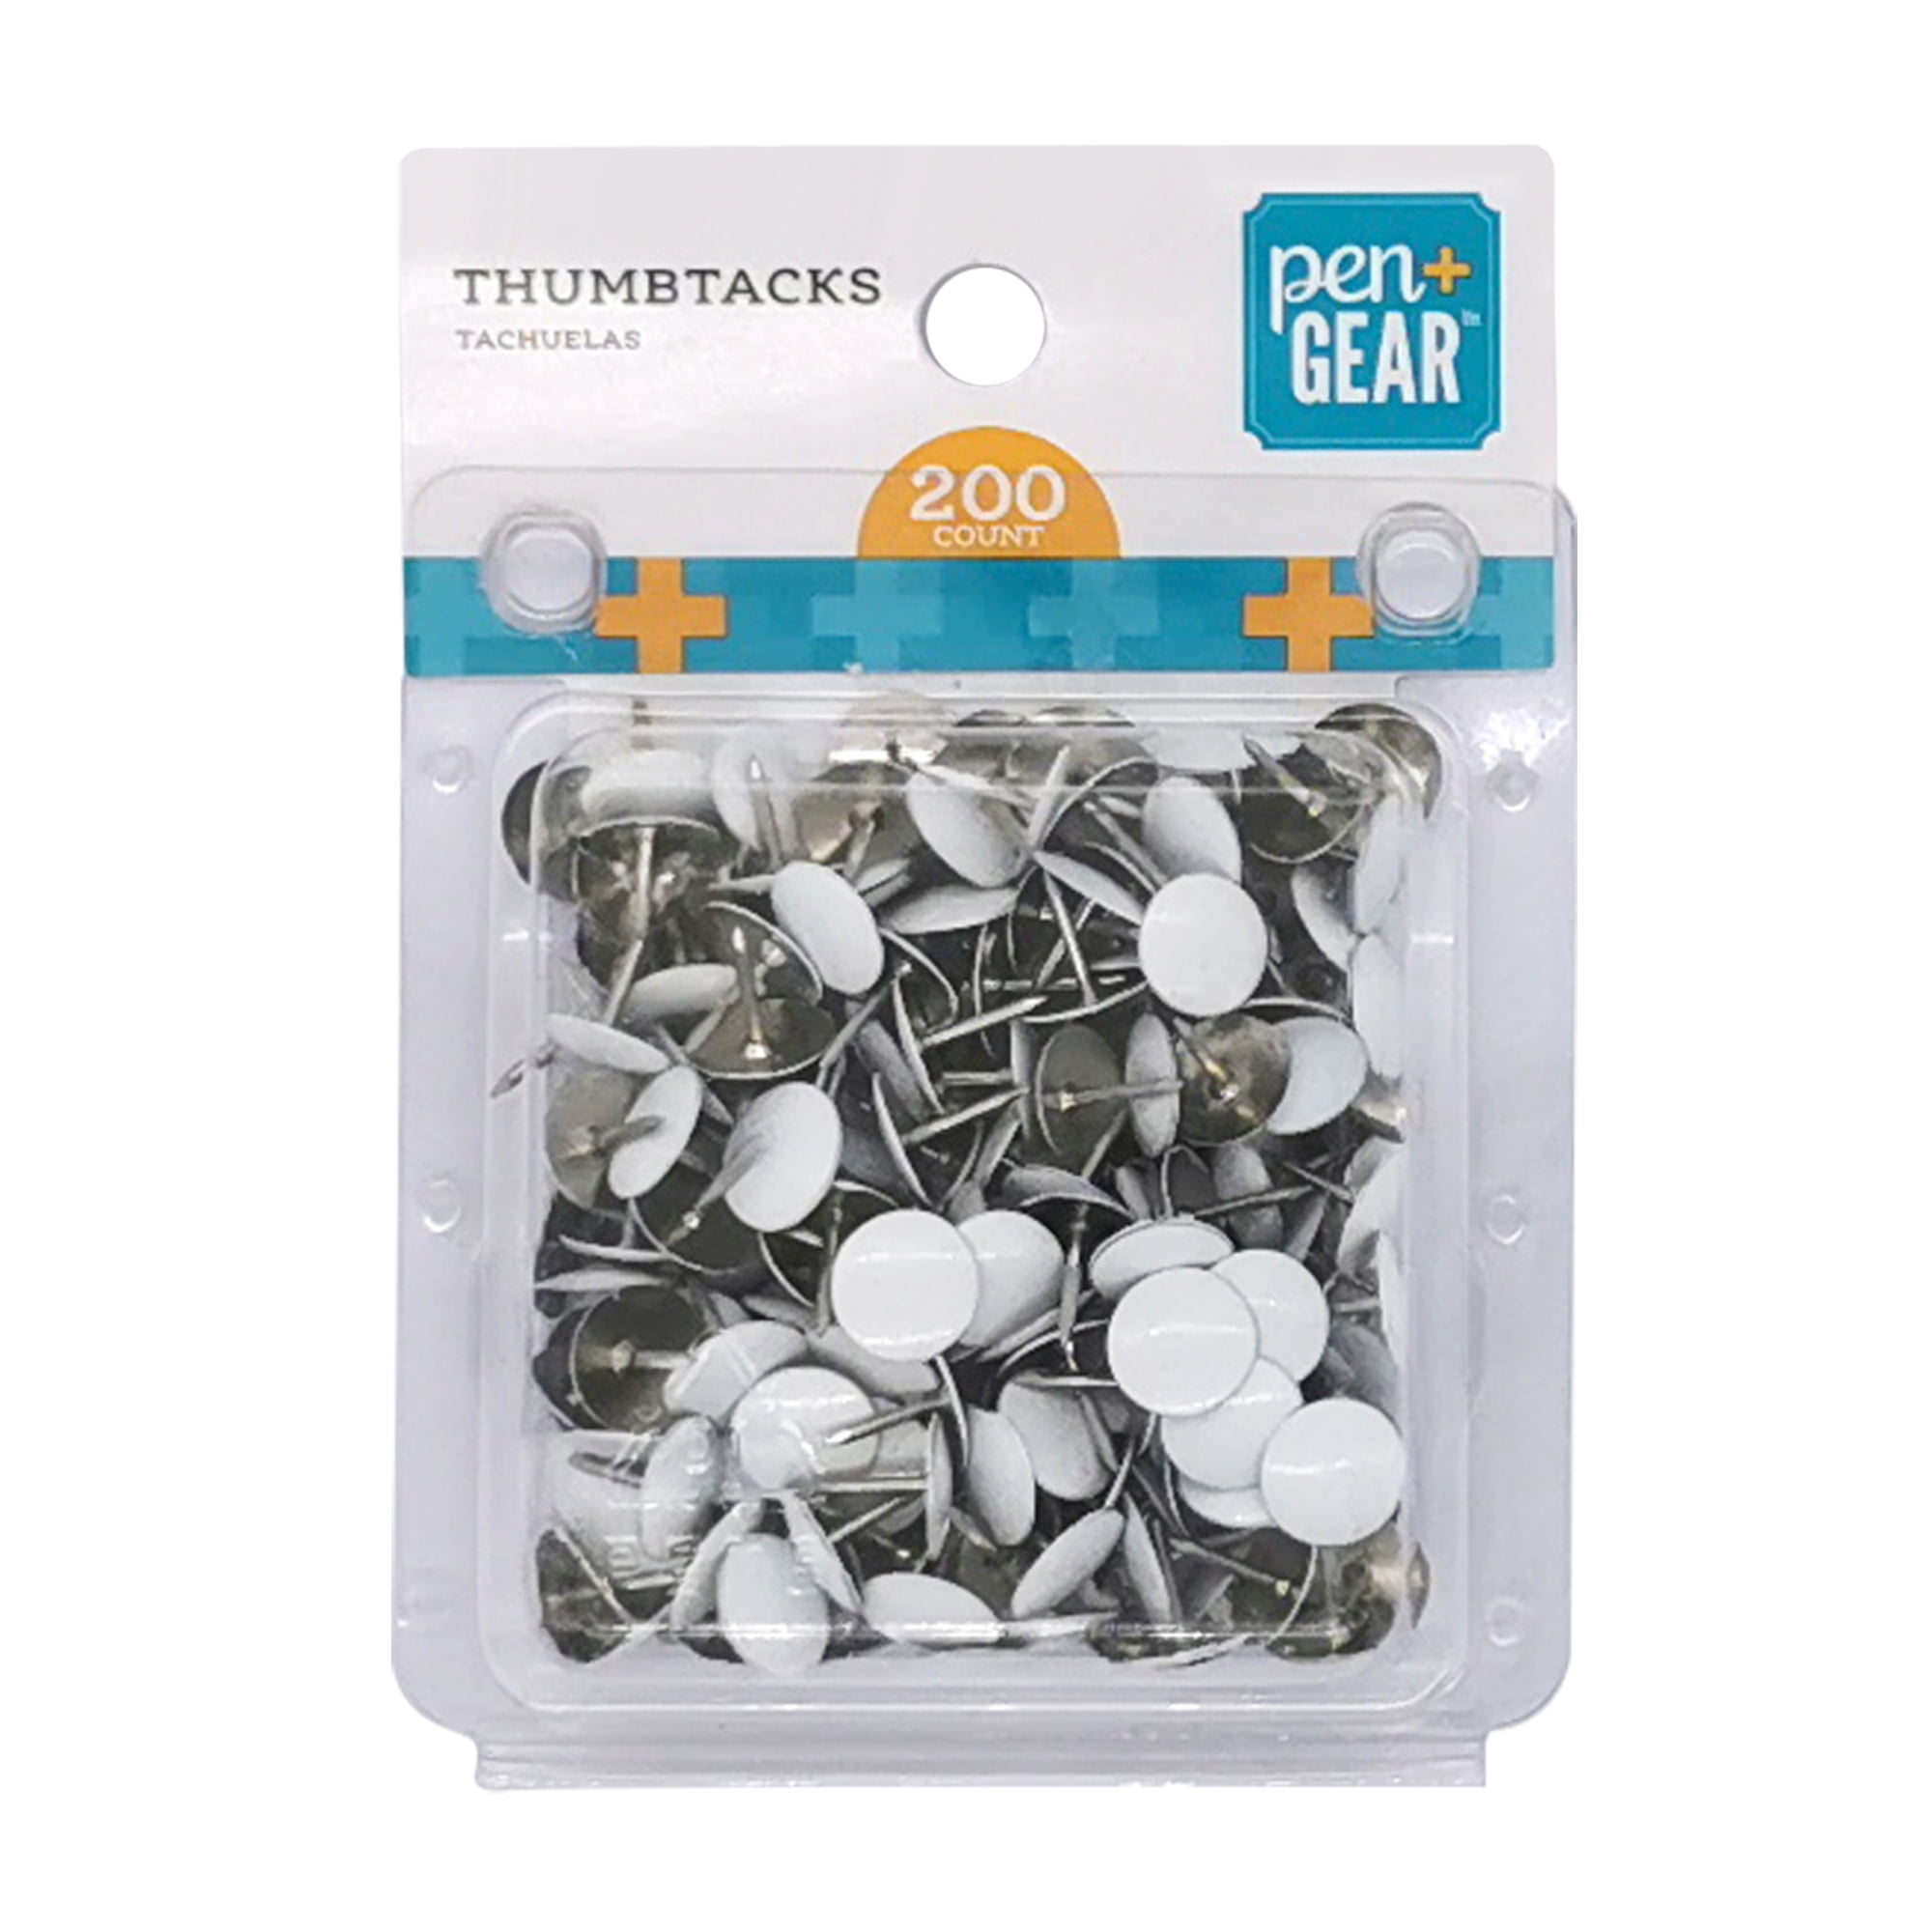 Pen + Gear Thumbtacks, Nickel Plated White Head, 200 Count, Pins and Tacks